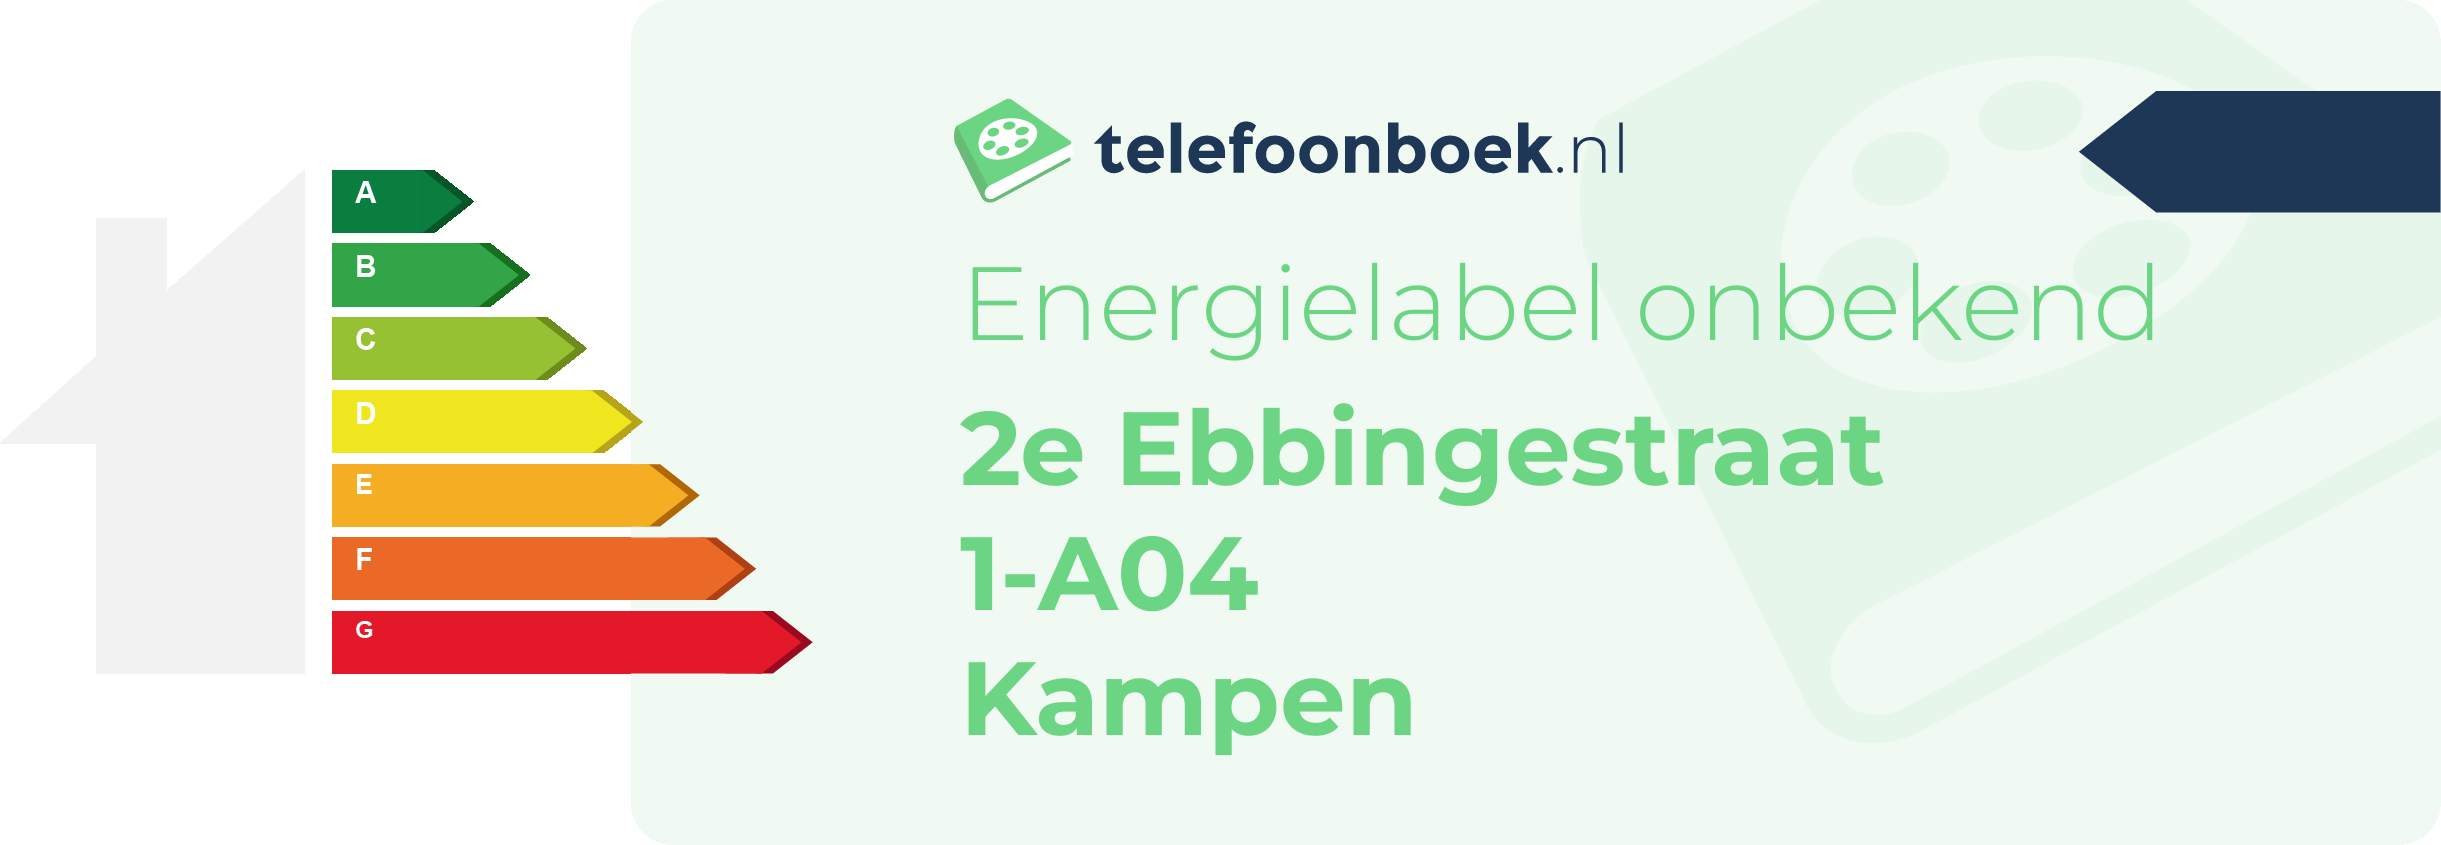 Energielabel 2e Ebbingestraat 1-A04 Kampen